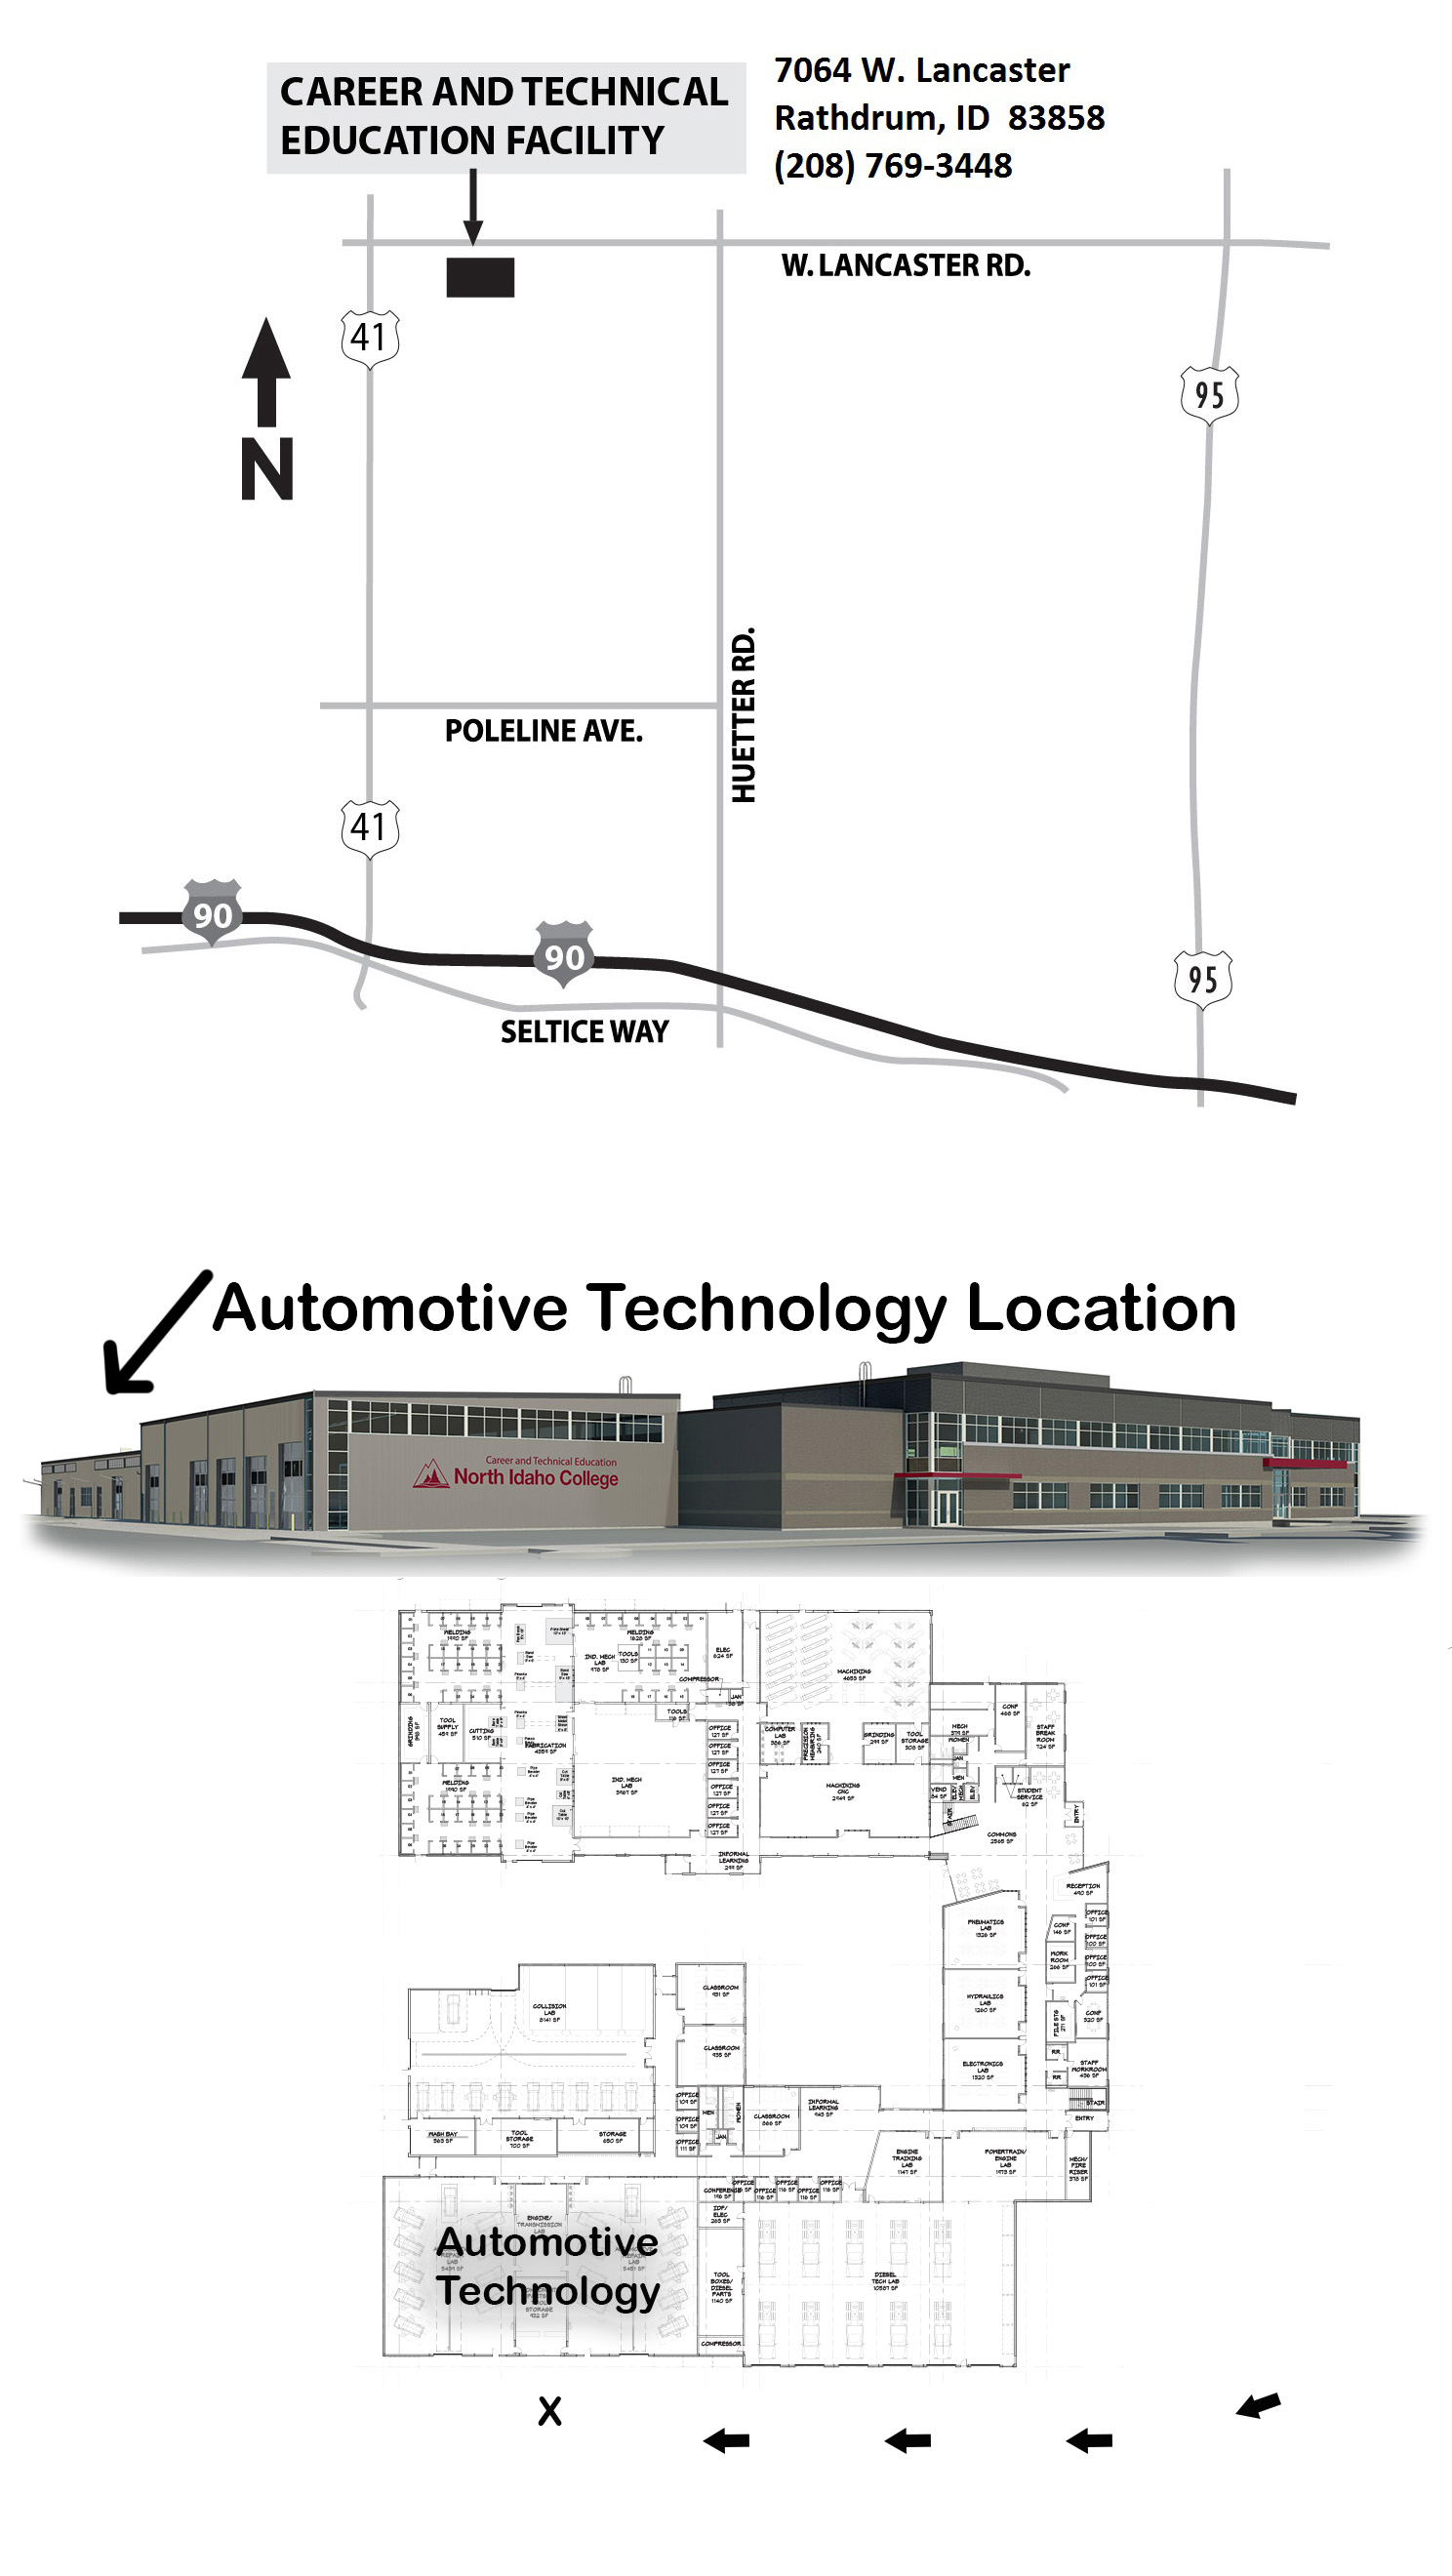 Automotive Technology Location